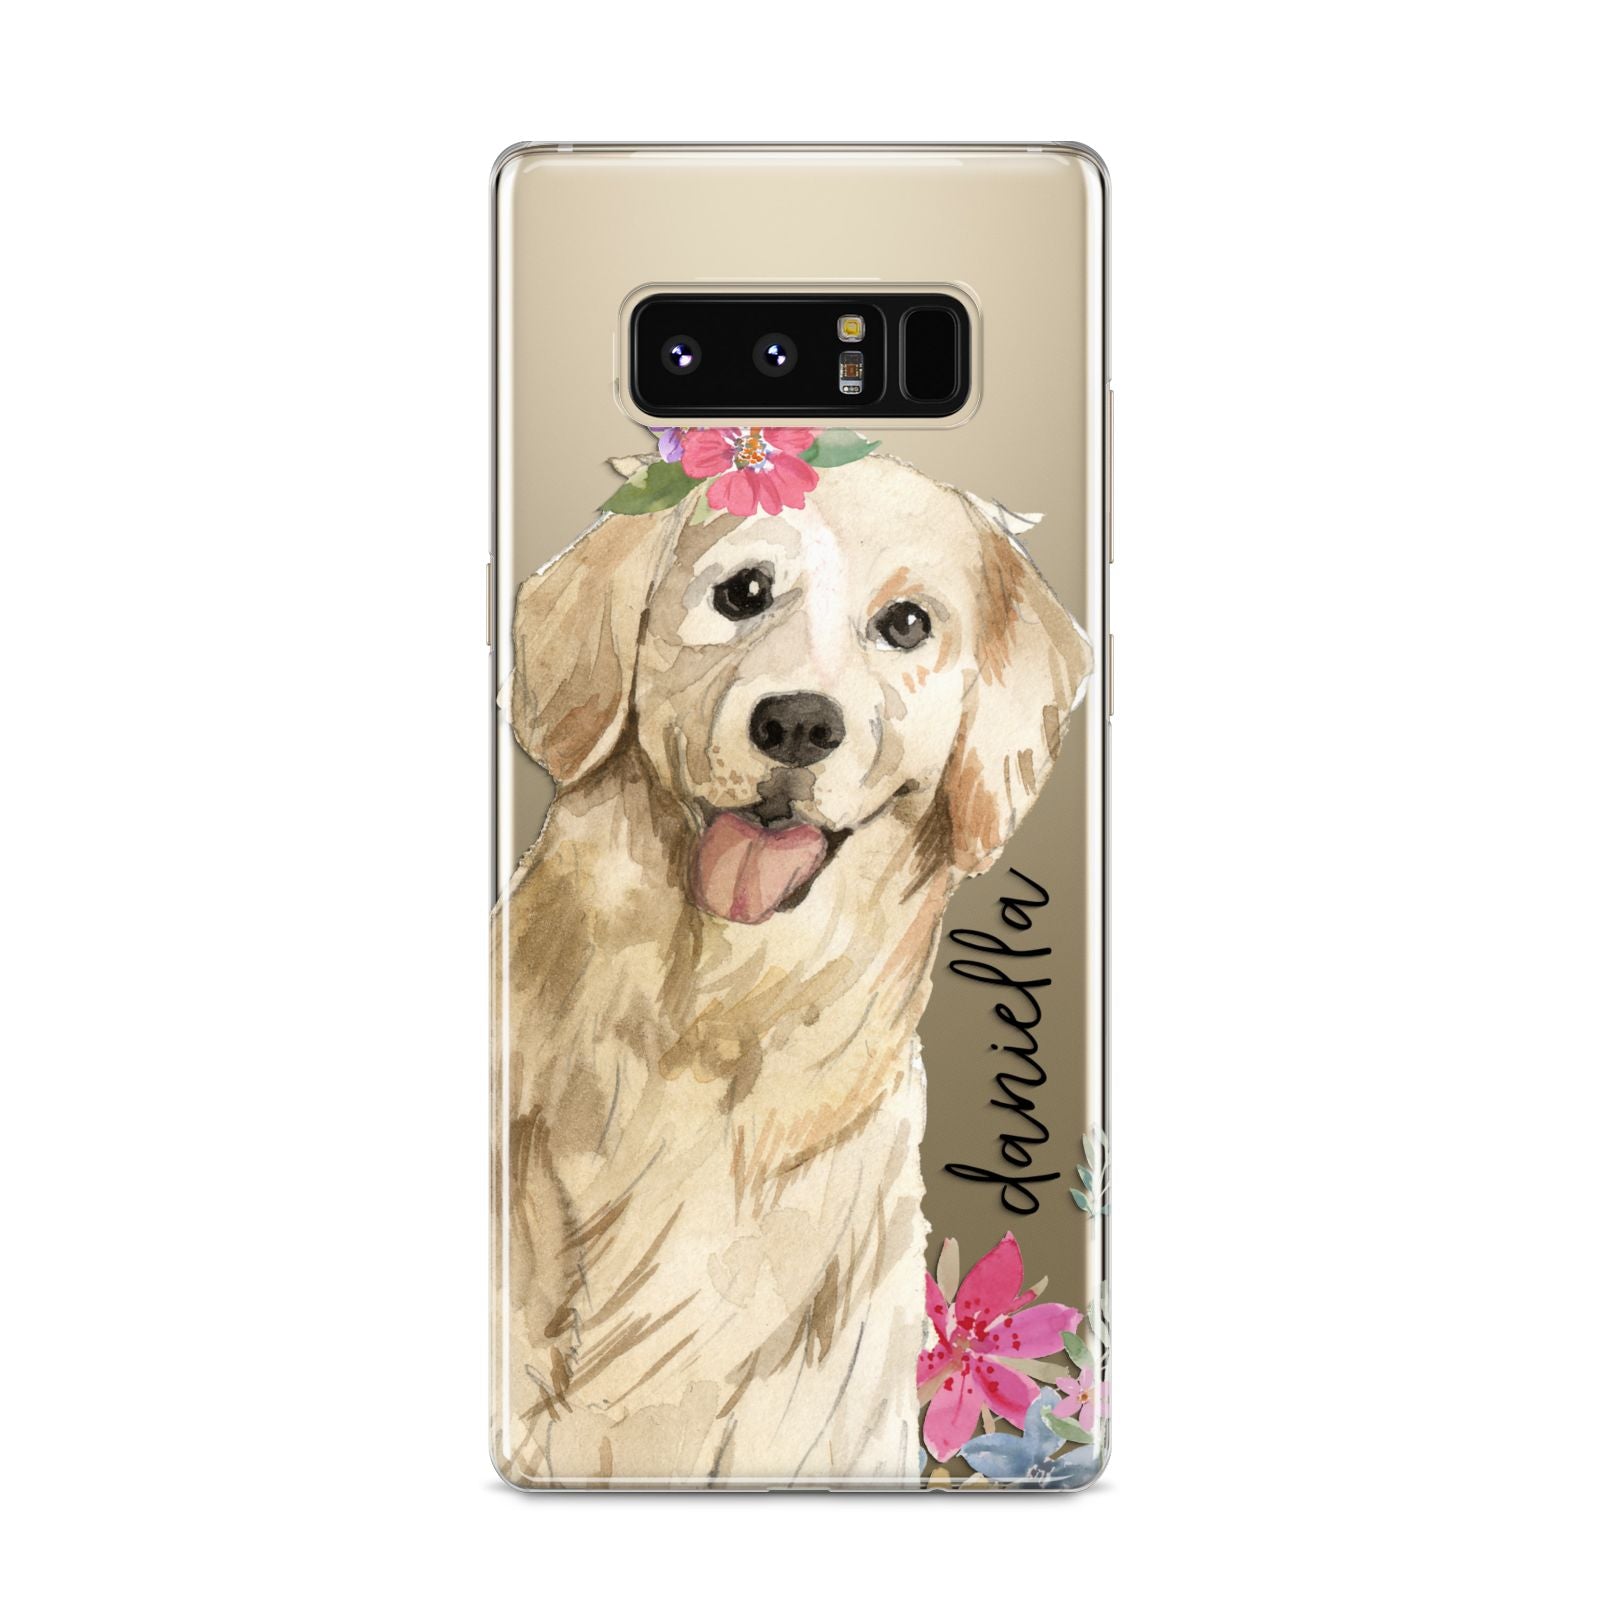 Personalised Golden Retriever Dog Samsung Galaxy S8 Case